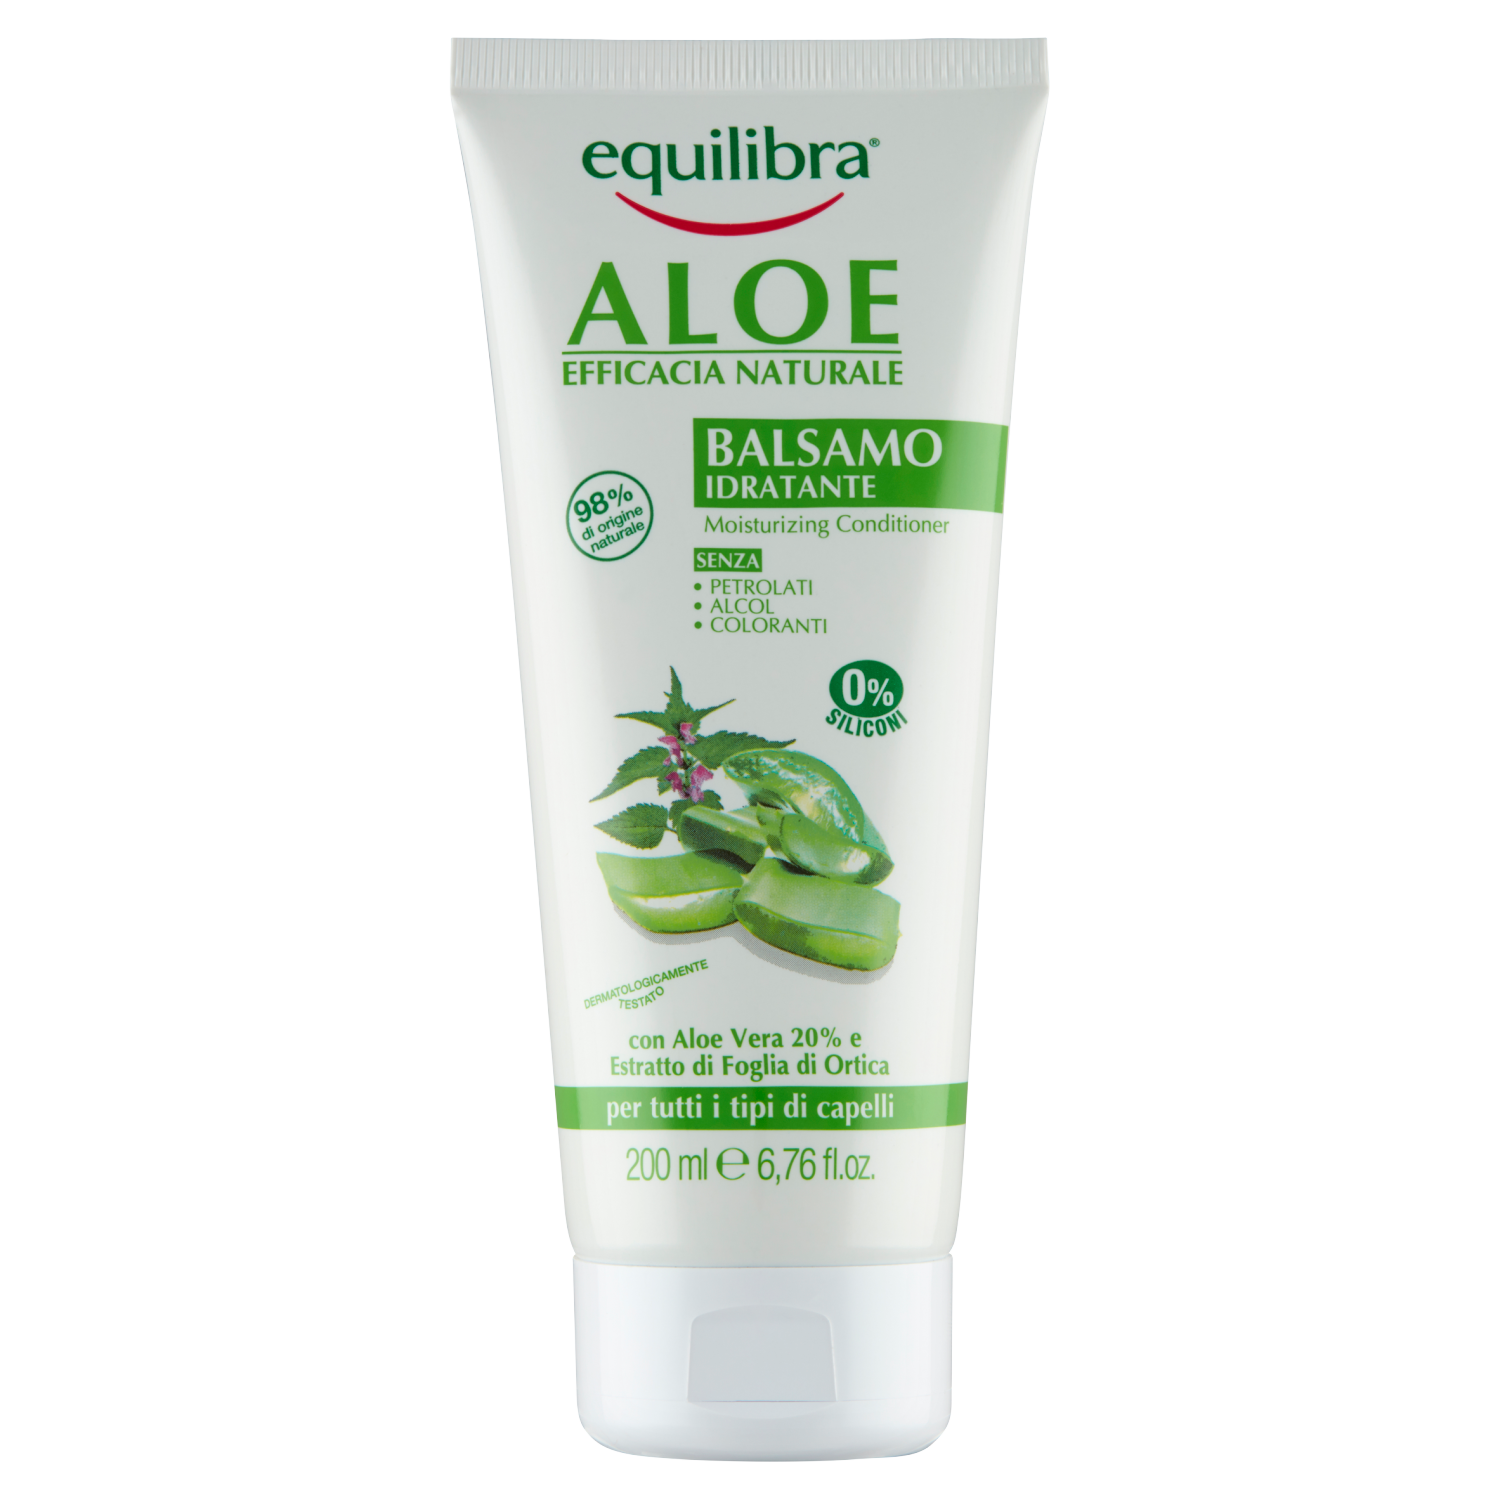 Equilibra Aloe увлажняющий кондиционер для волос, 200 мл цена и фото